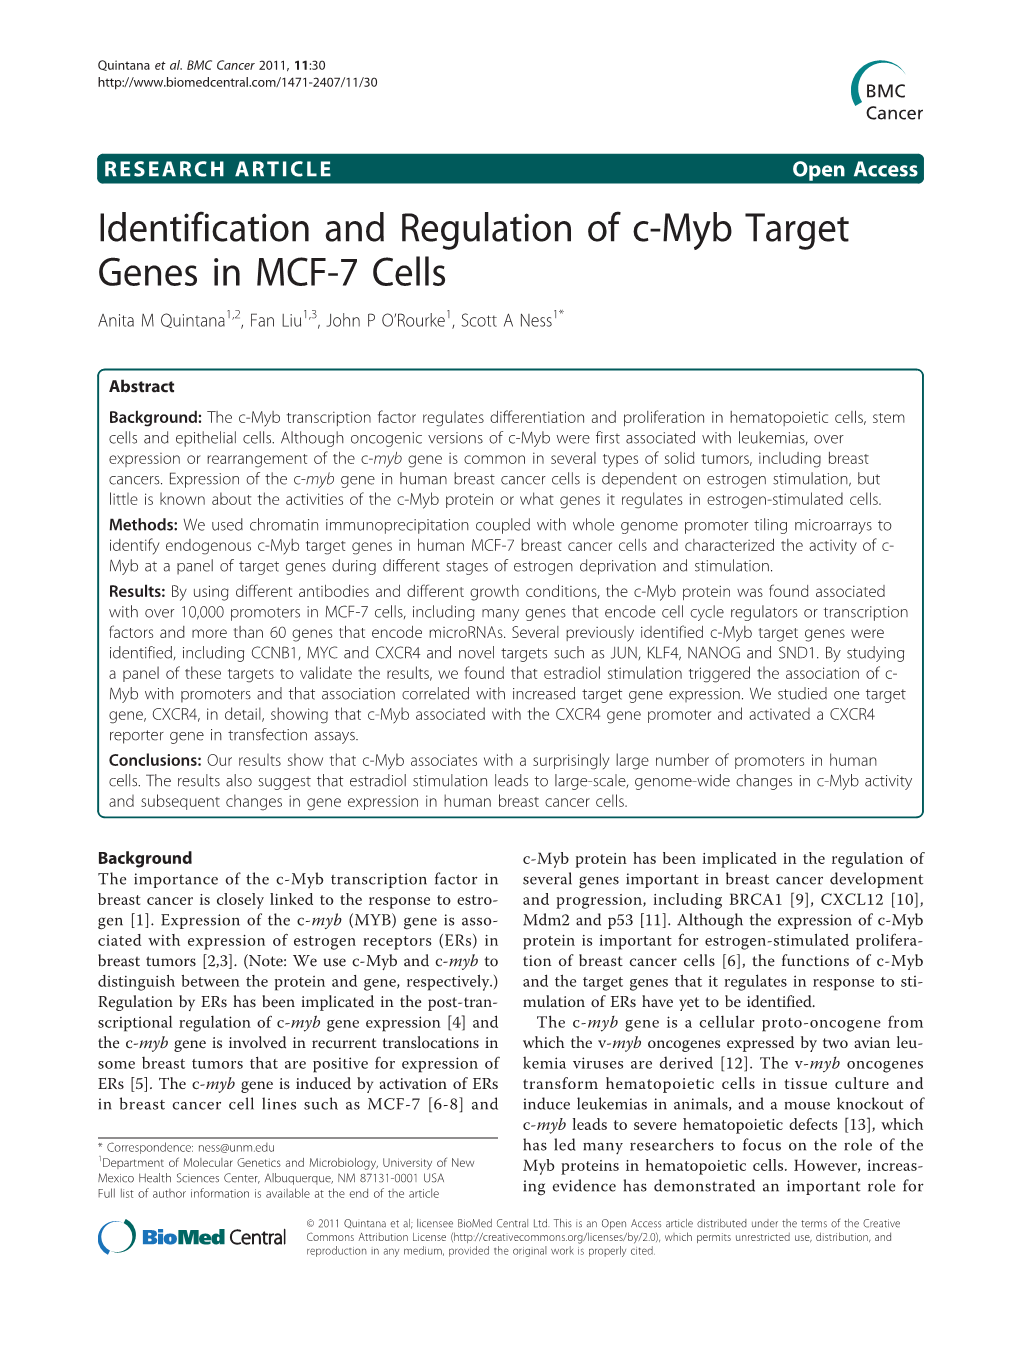 Identification and Regulation of C-Myb Target Genes in MCF-7 Cells Anita M Quintana1,2, Fan Liu1,3, John P O’Rourke1, Scott a Ness1*